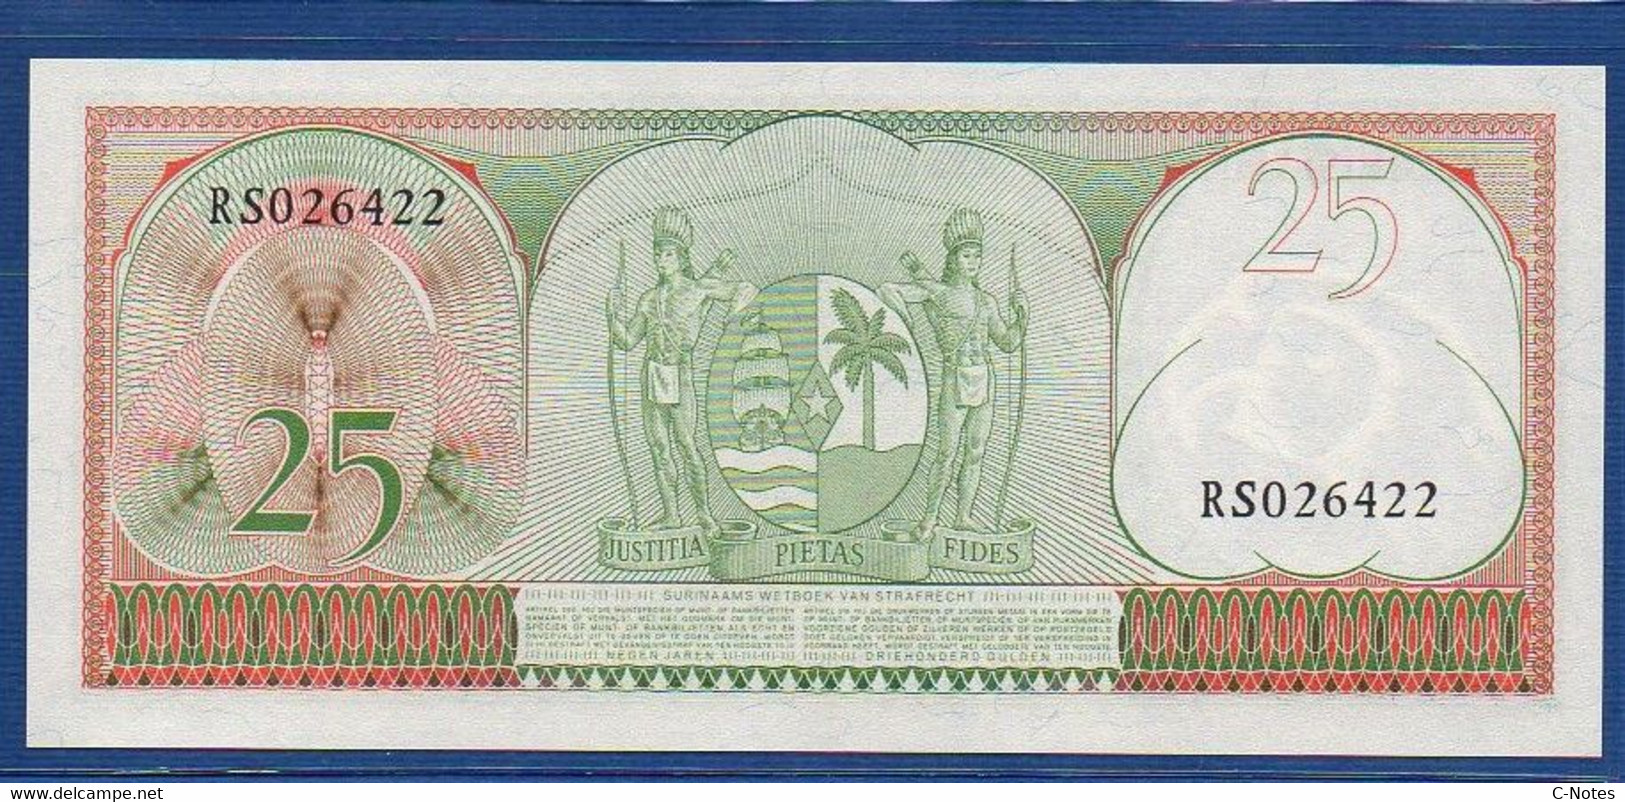 SURINAME - P.122 – 25 Gulden 1963 UNC, Serie RS026422 - Suriname